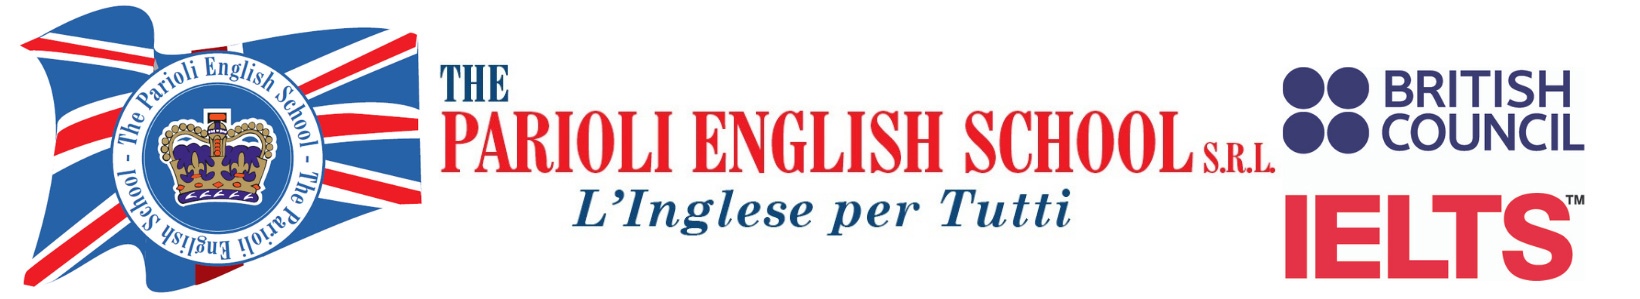 Parioli English School